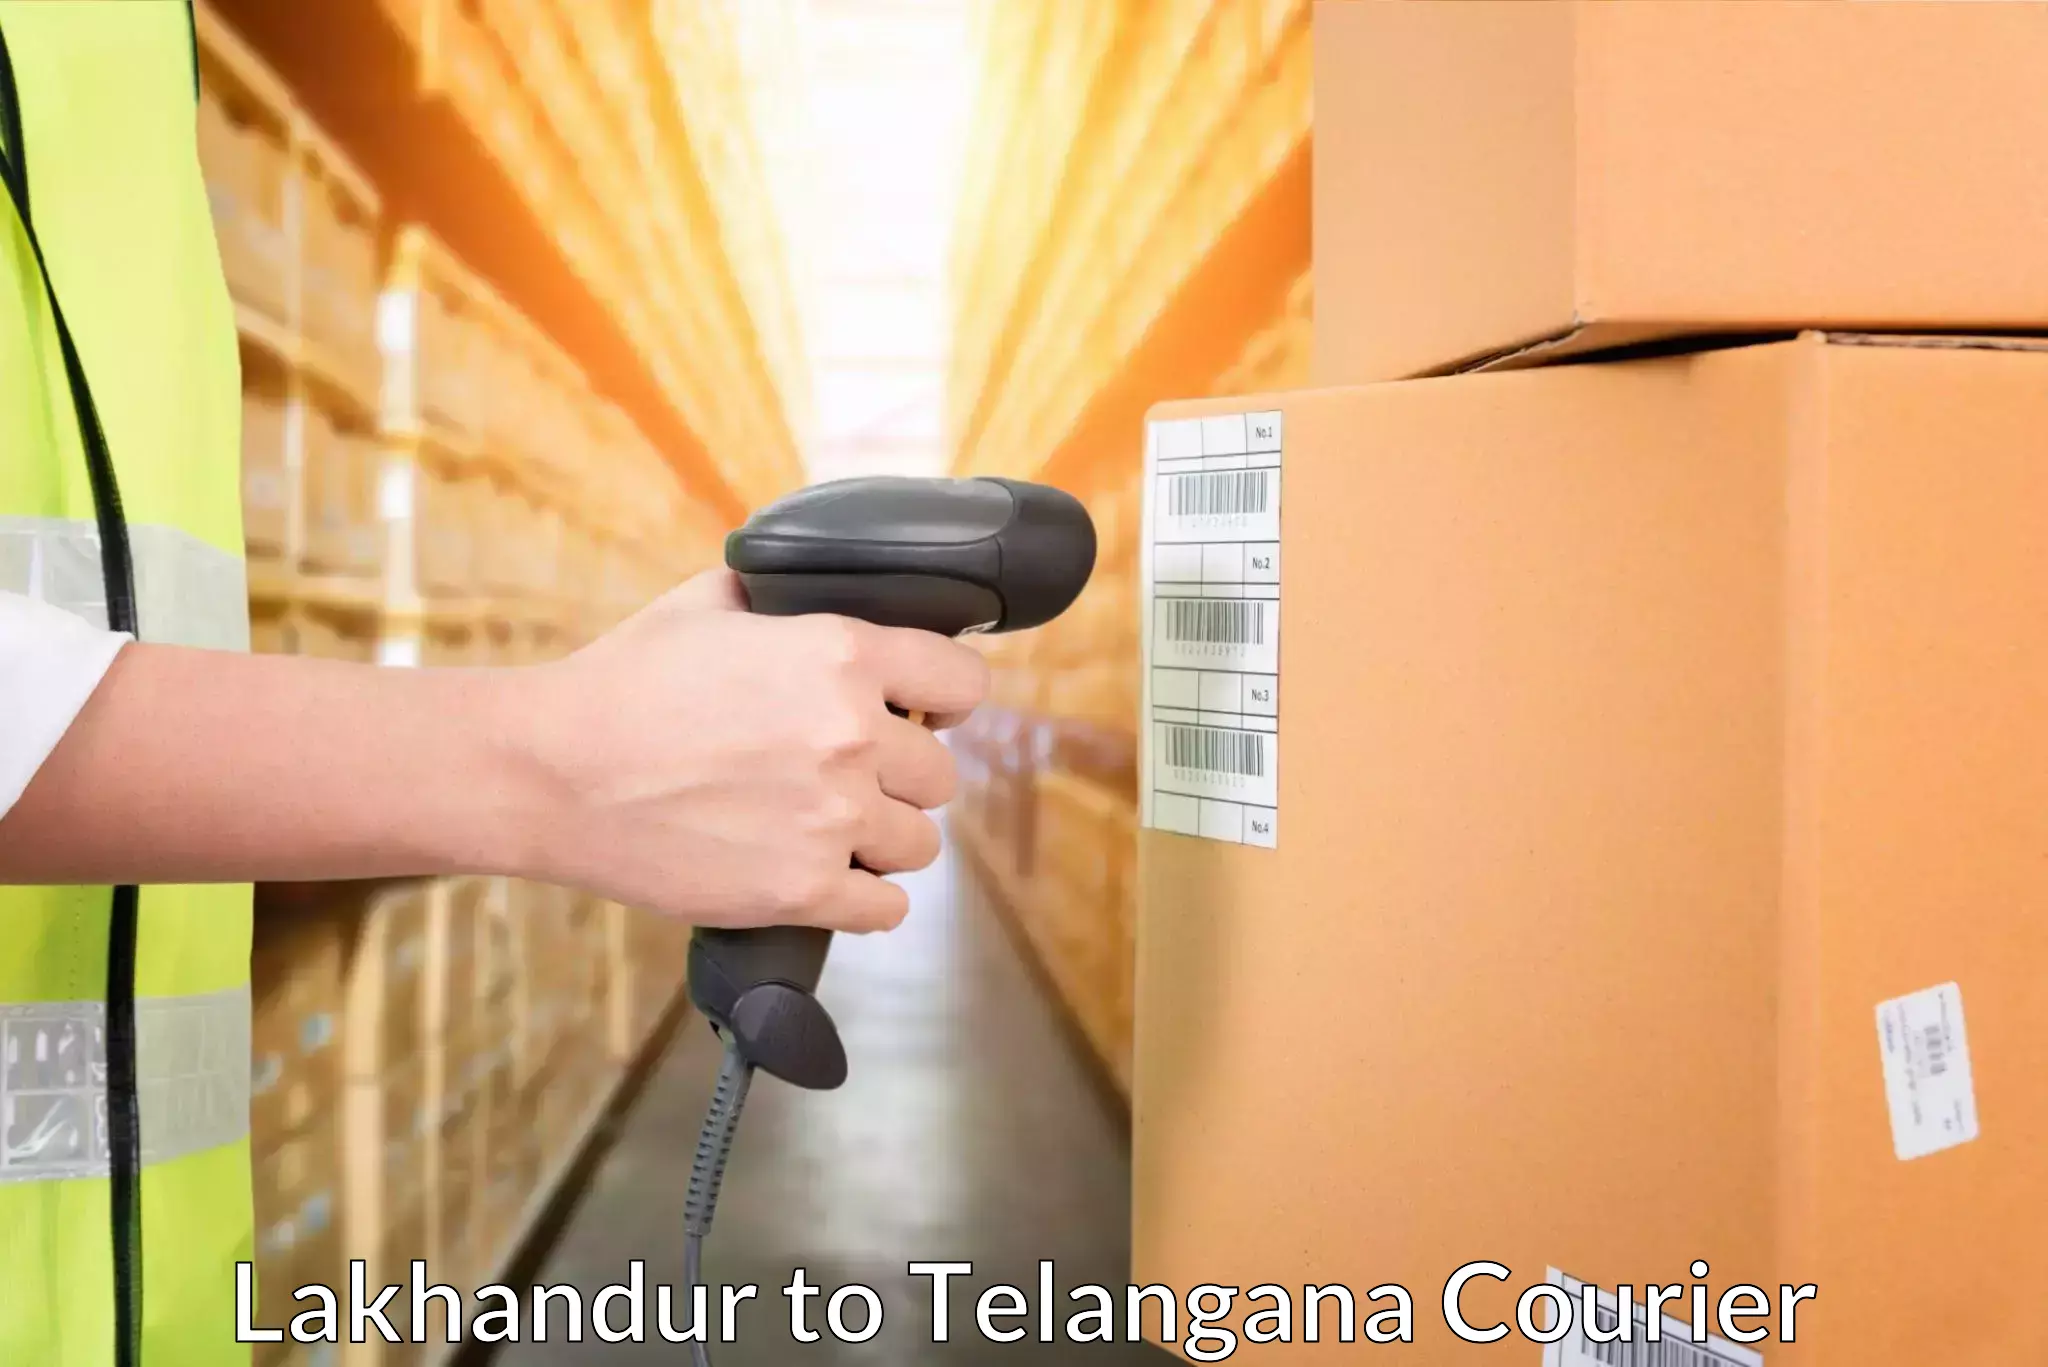 Advanced delivery network Lakhandur to Gangadhara